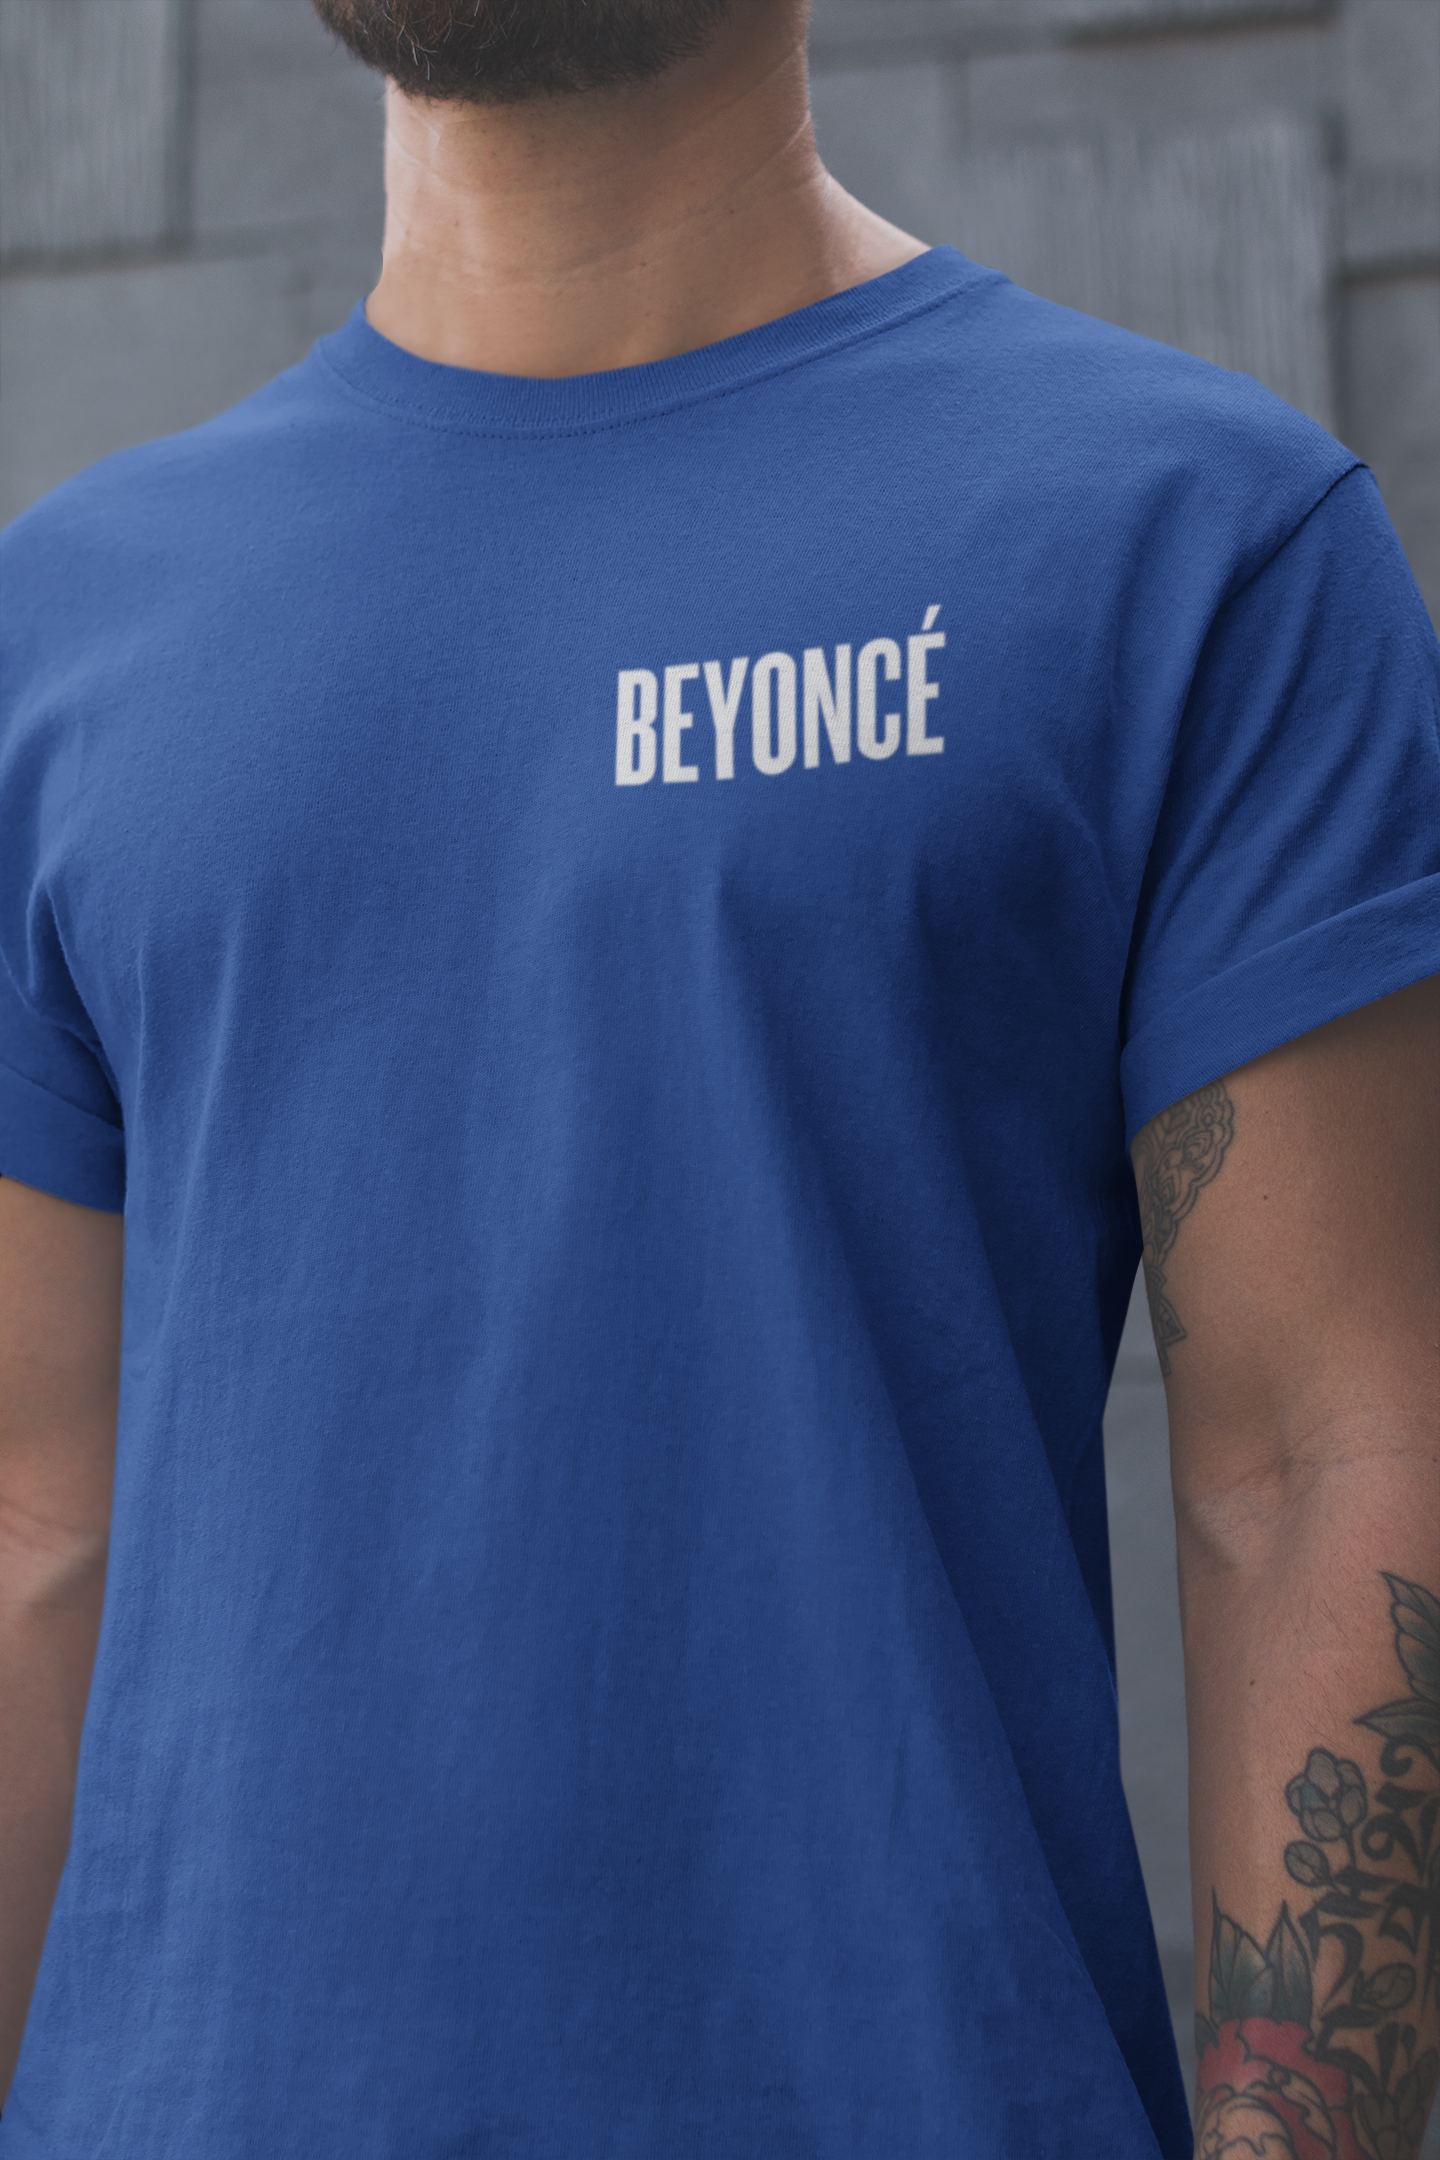 Camiseta "Beyoncé" Clássica - Música